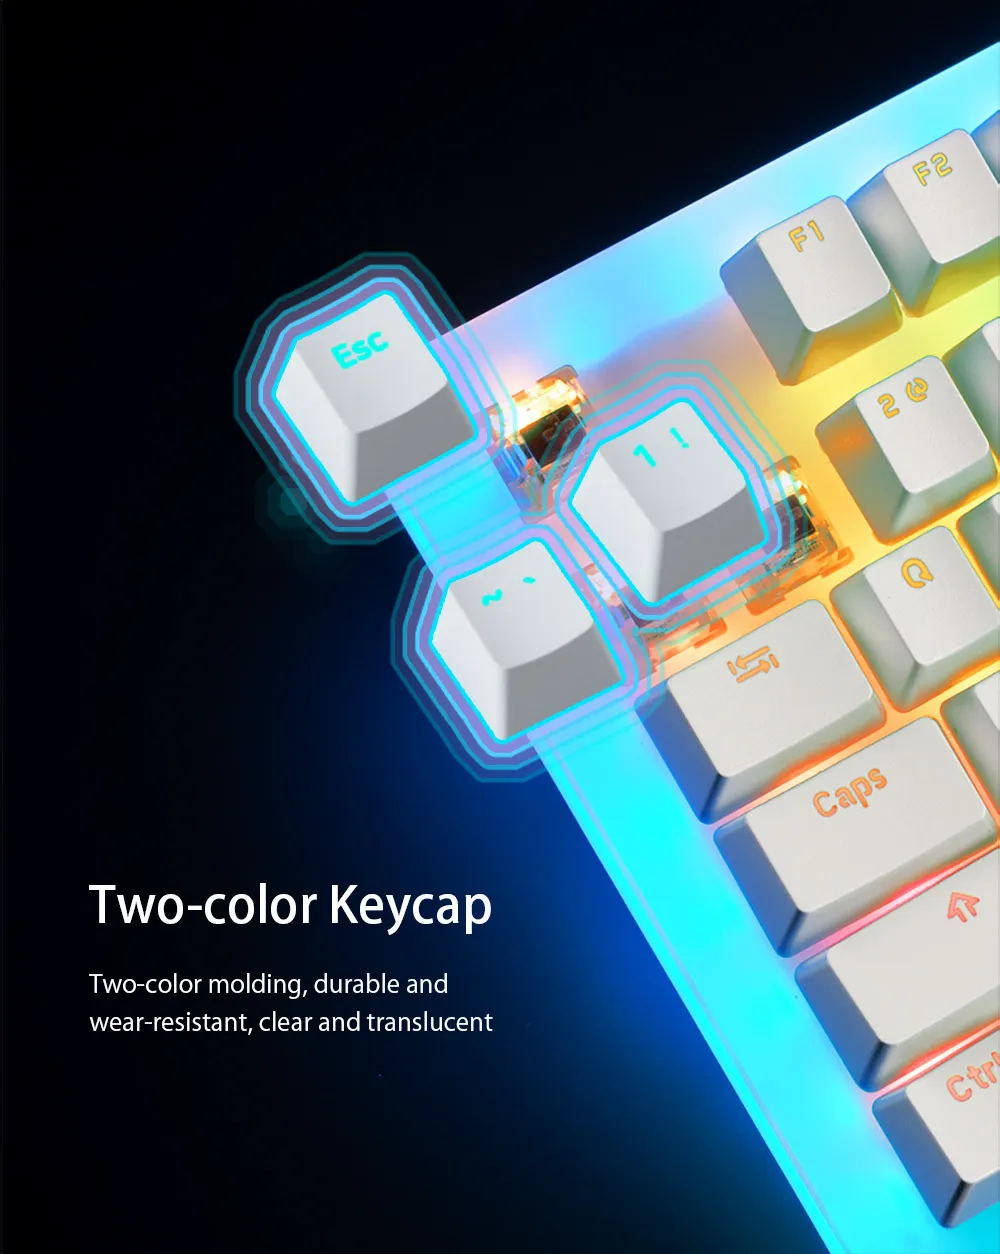 Womeier 87 مفتاح K87 حار قابلة للتبديل RGB الألعاب الميكانيكية لوحة المفاتيح 80٪ التبديل الرموز الزجاج الشفاف مع قاعدة بلورية